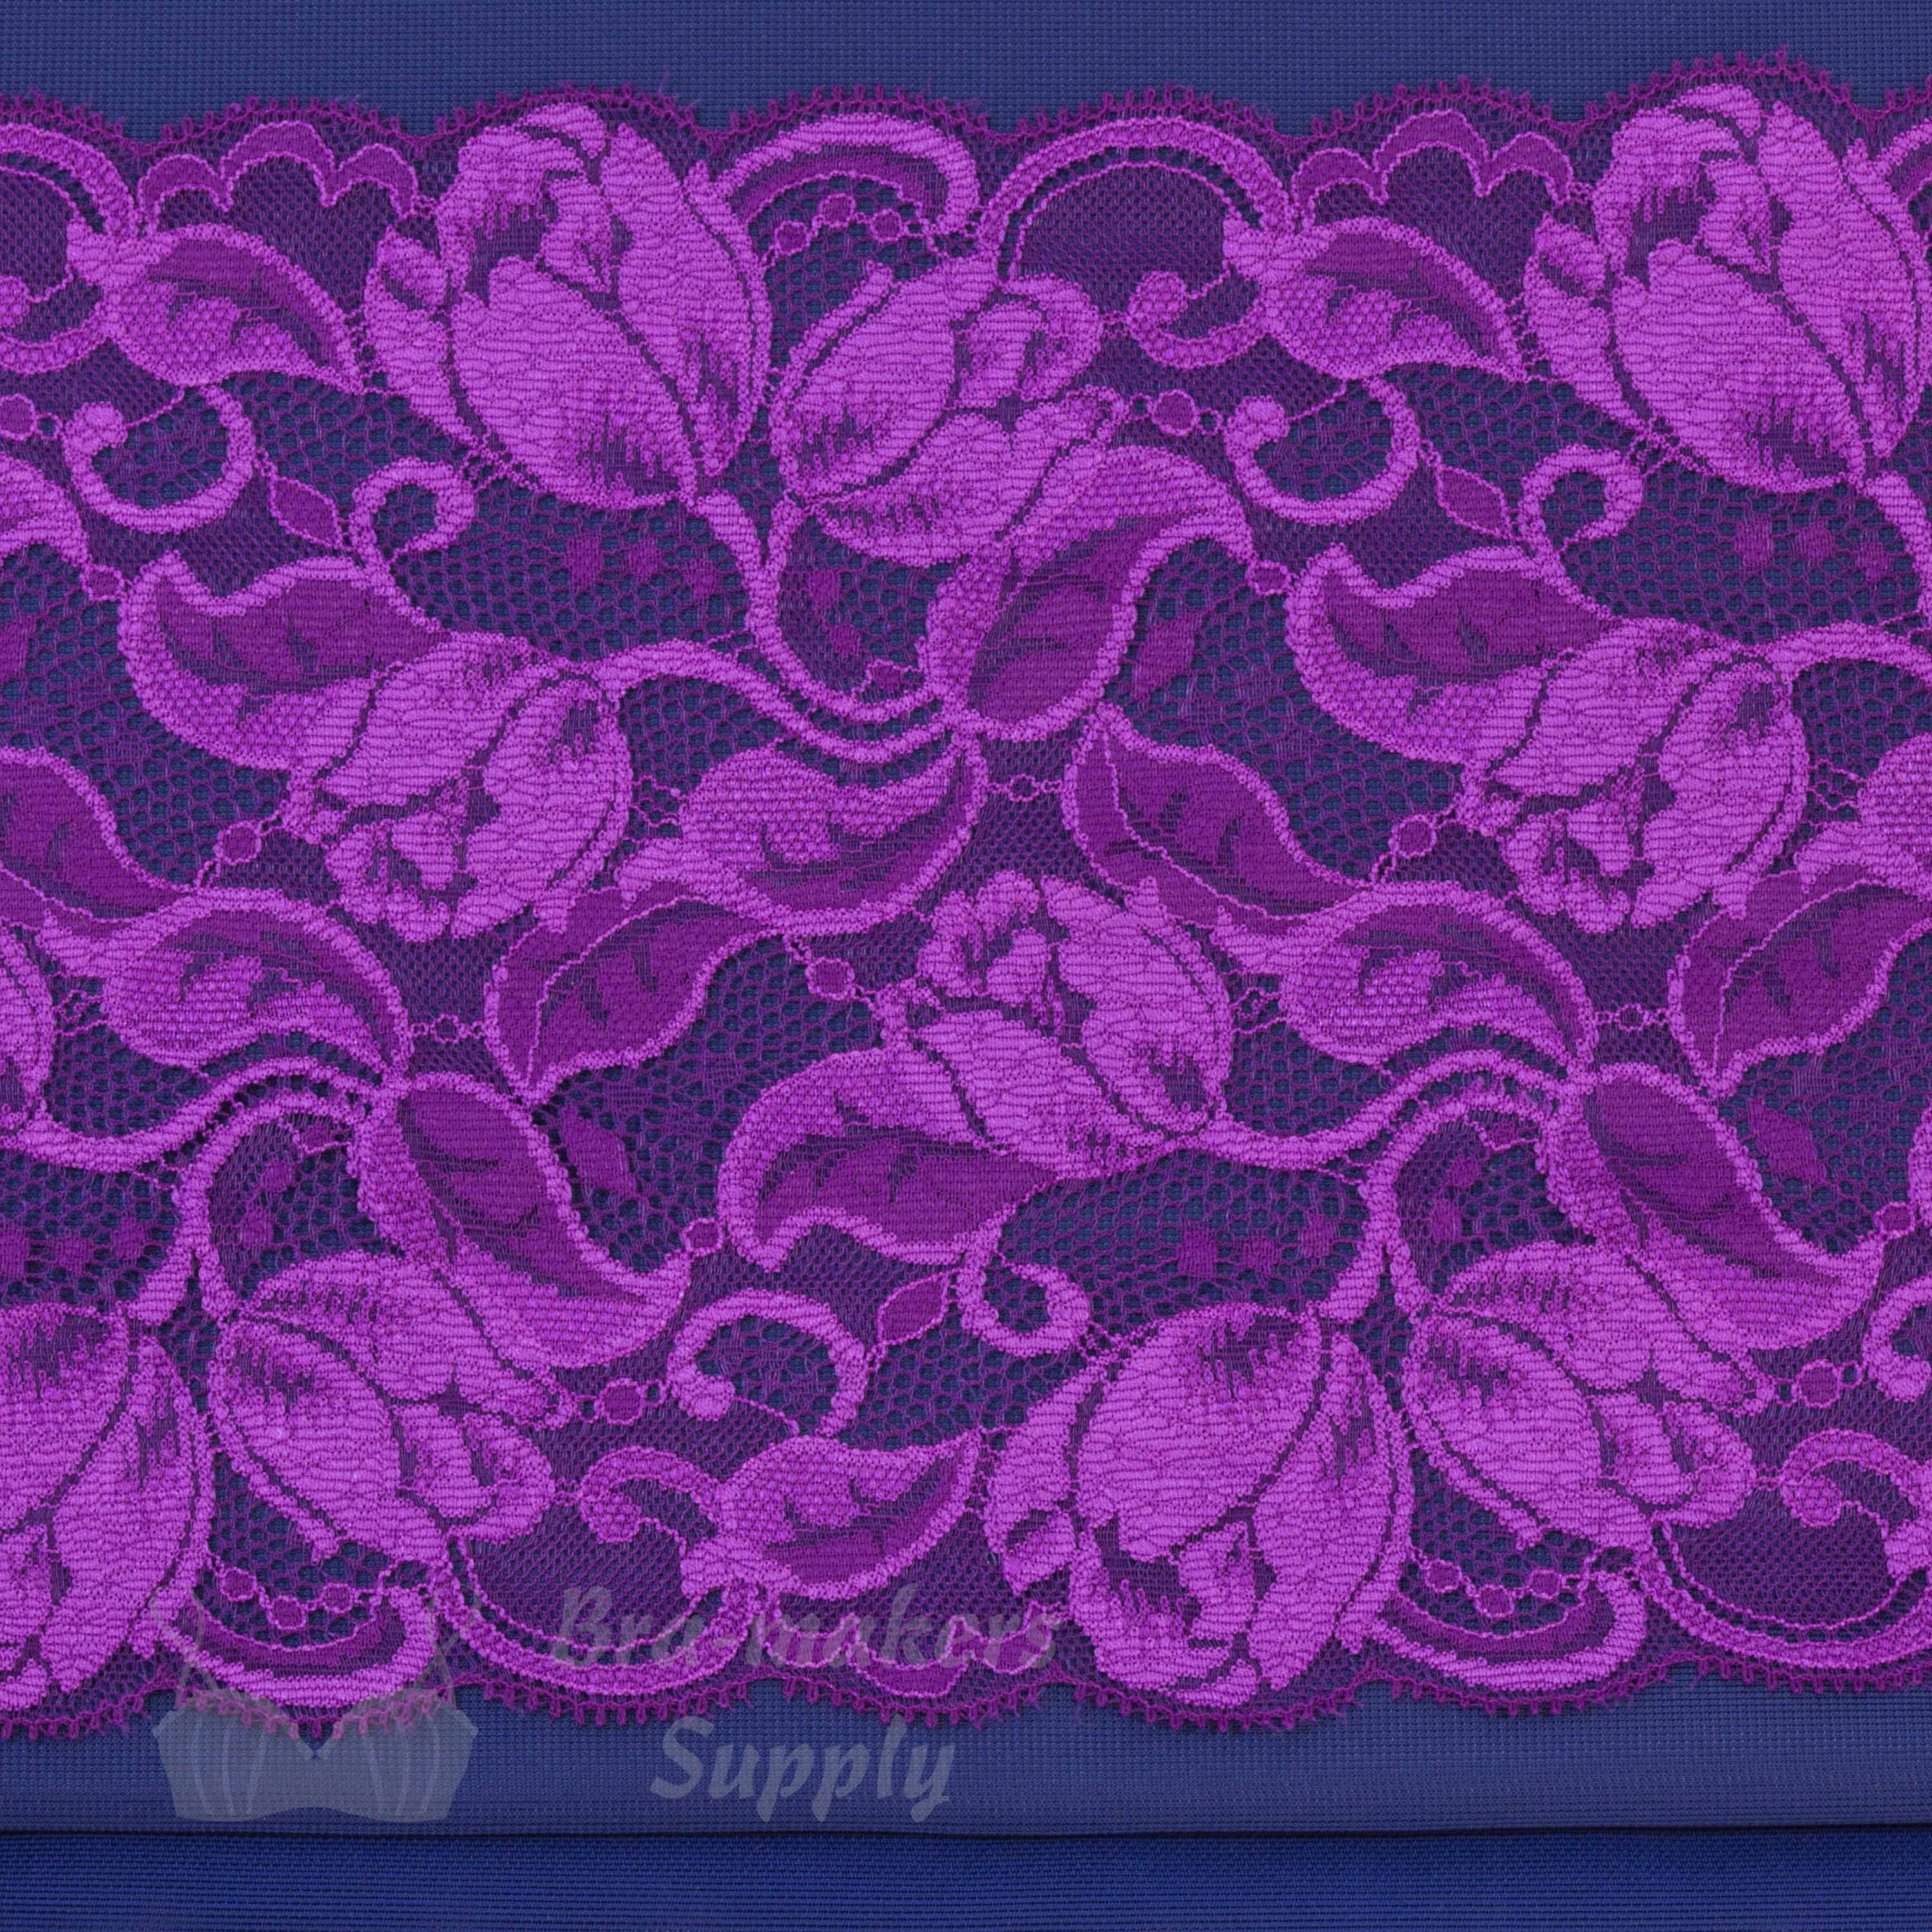 navy blue trio bra fabrics pack with dark fuchsia tulips rigid lace KT-68-LT-62.45 from Bra-Makers Supply